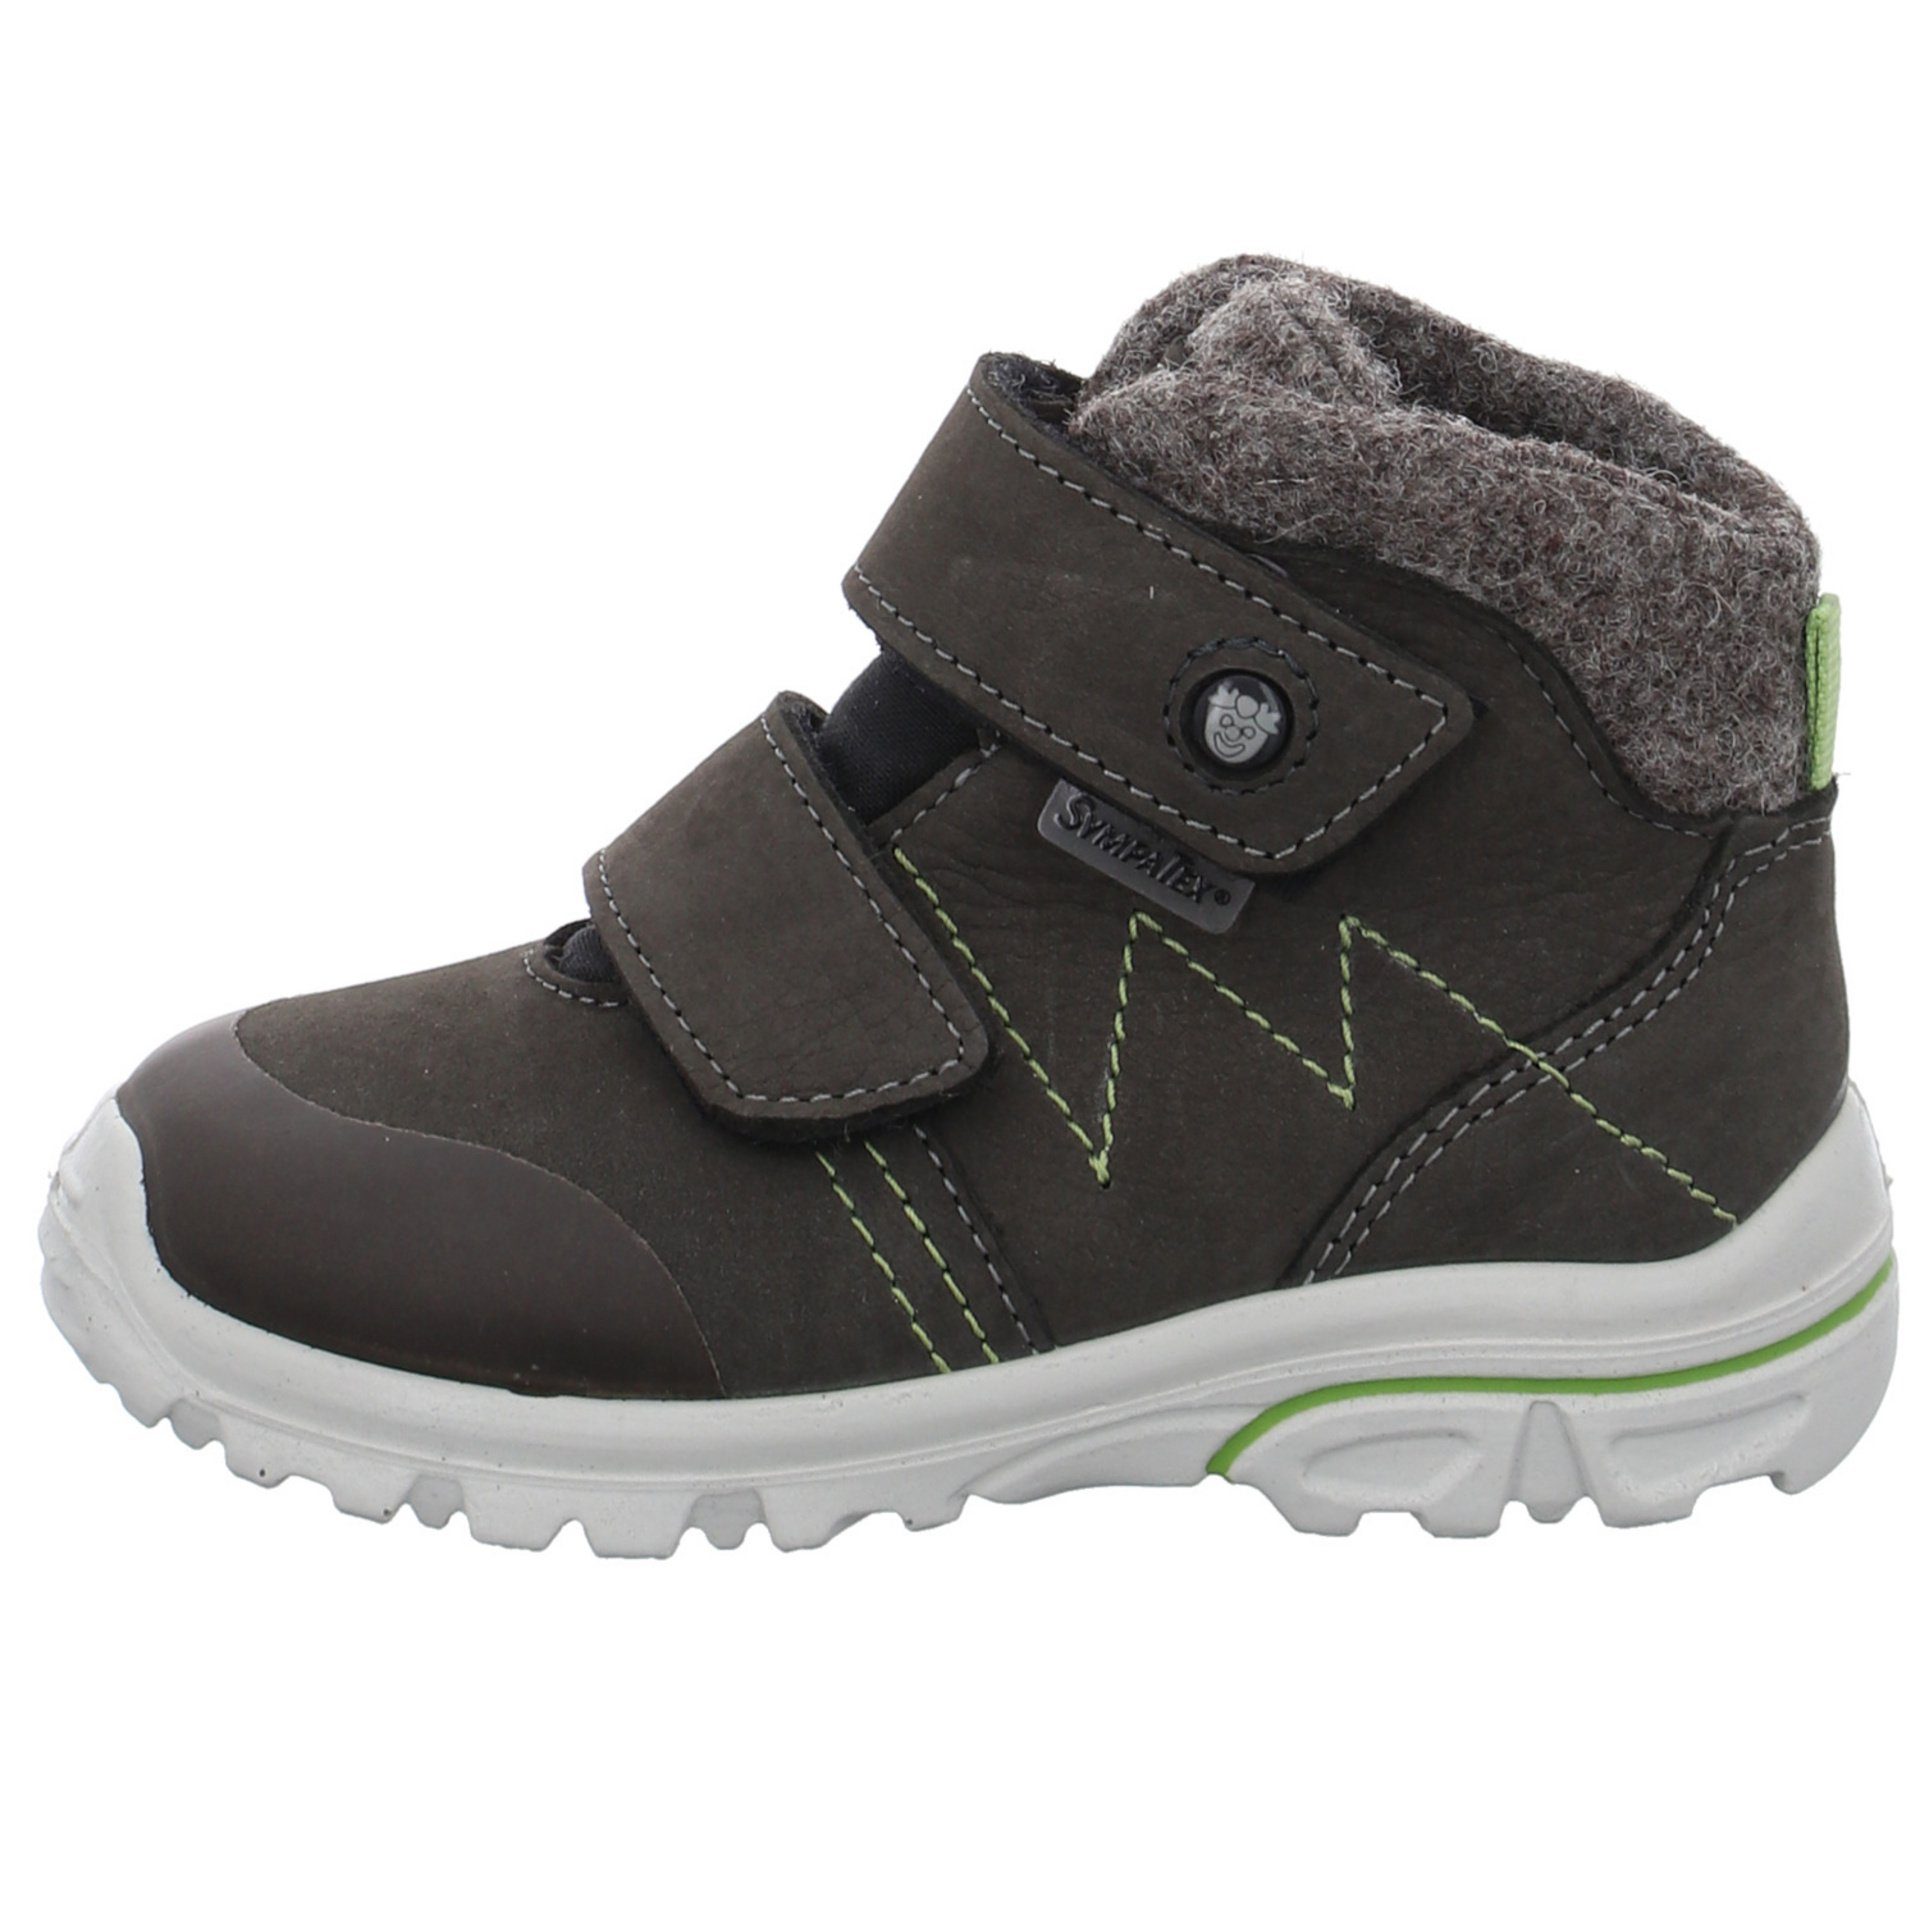 Krabbelschuhe Boots Leder-/Textilkombination Baby Ricosta Lauflernschuhe timo Dario Lauflernschuh Pepino